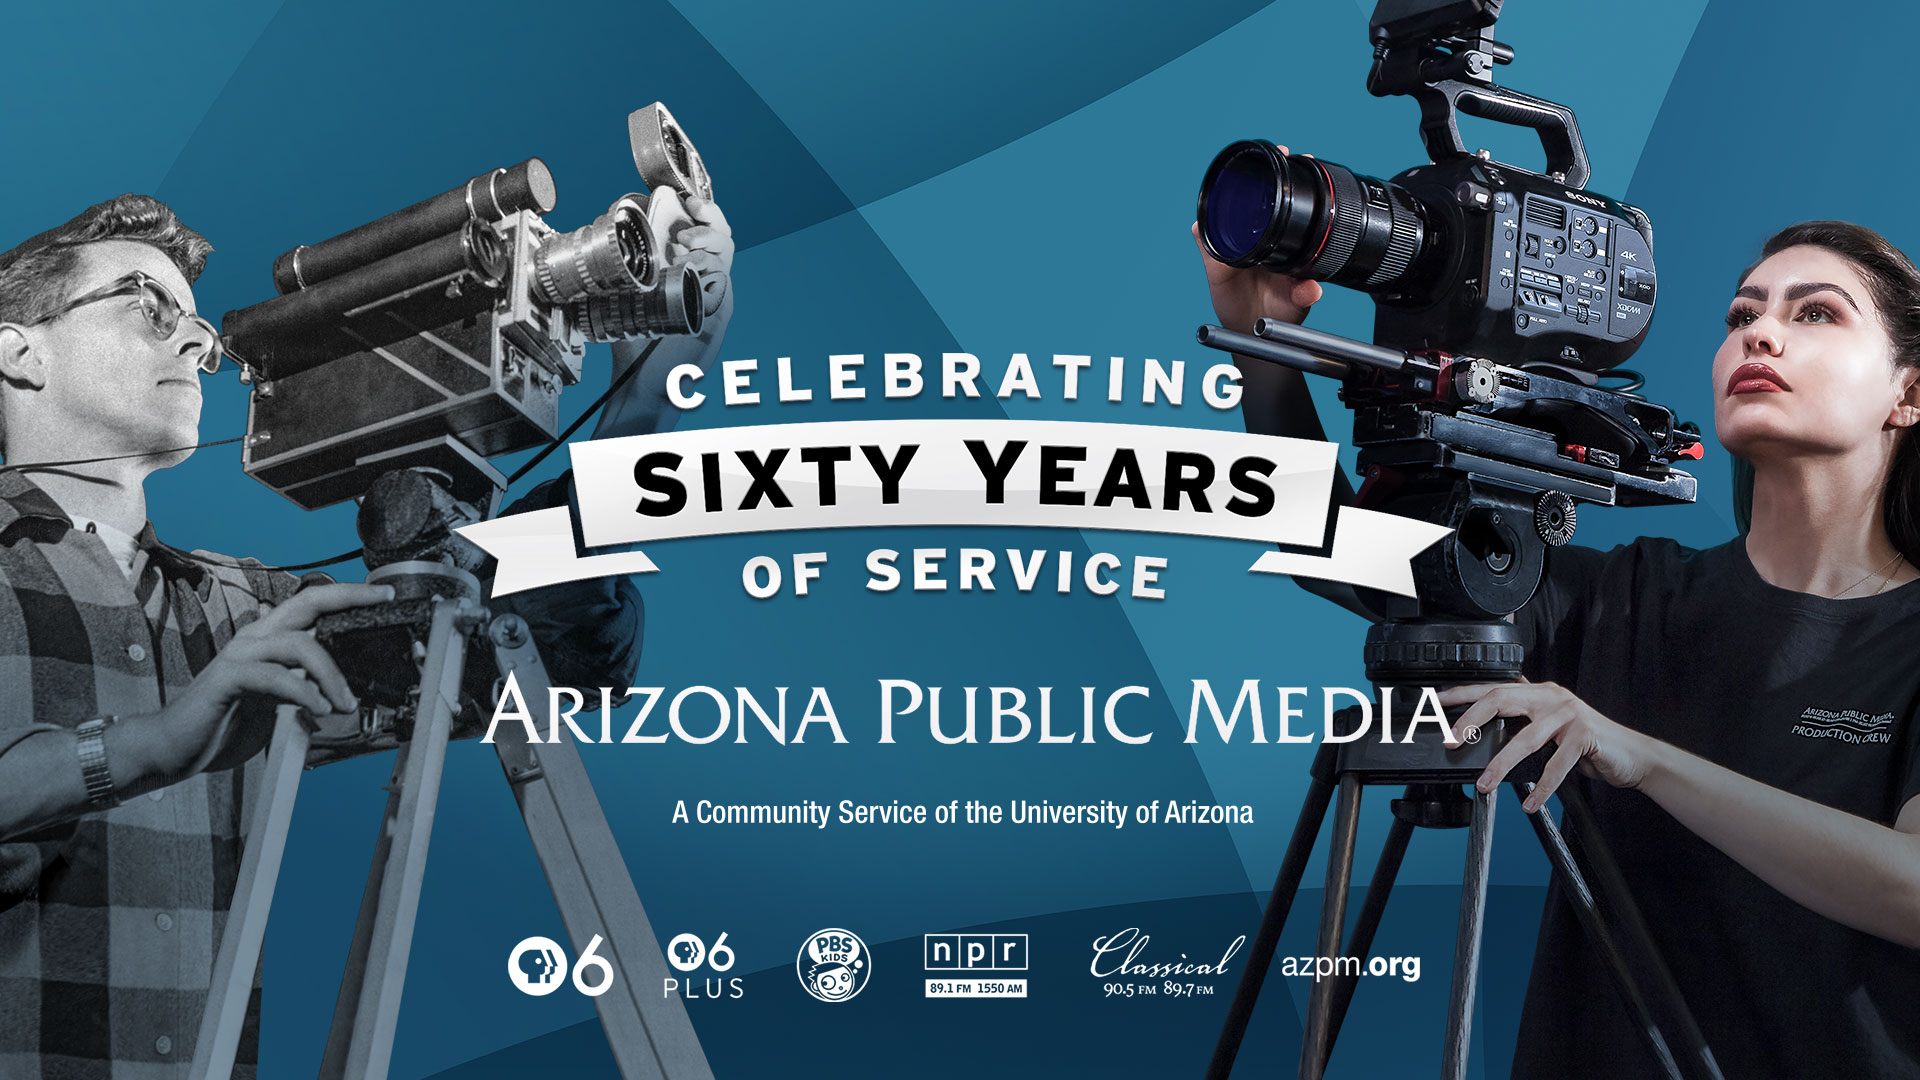 Arizona Public Media is celebrating 60 years of service in 2019.